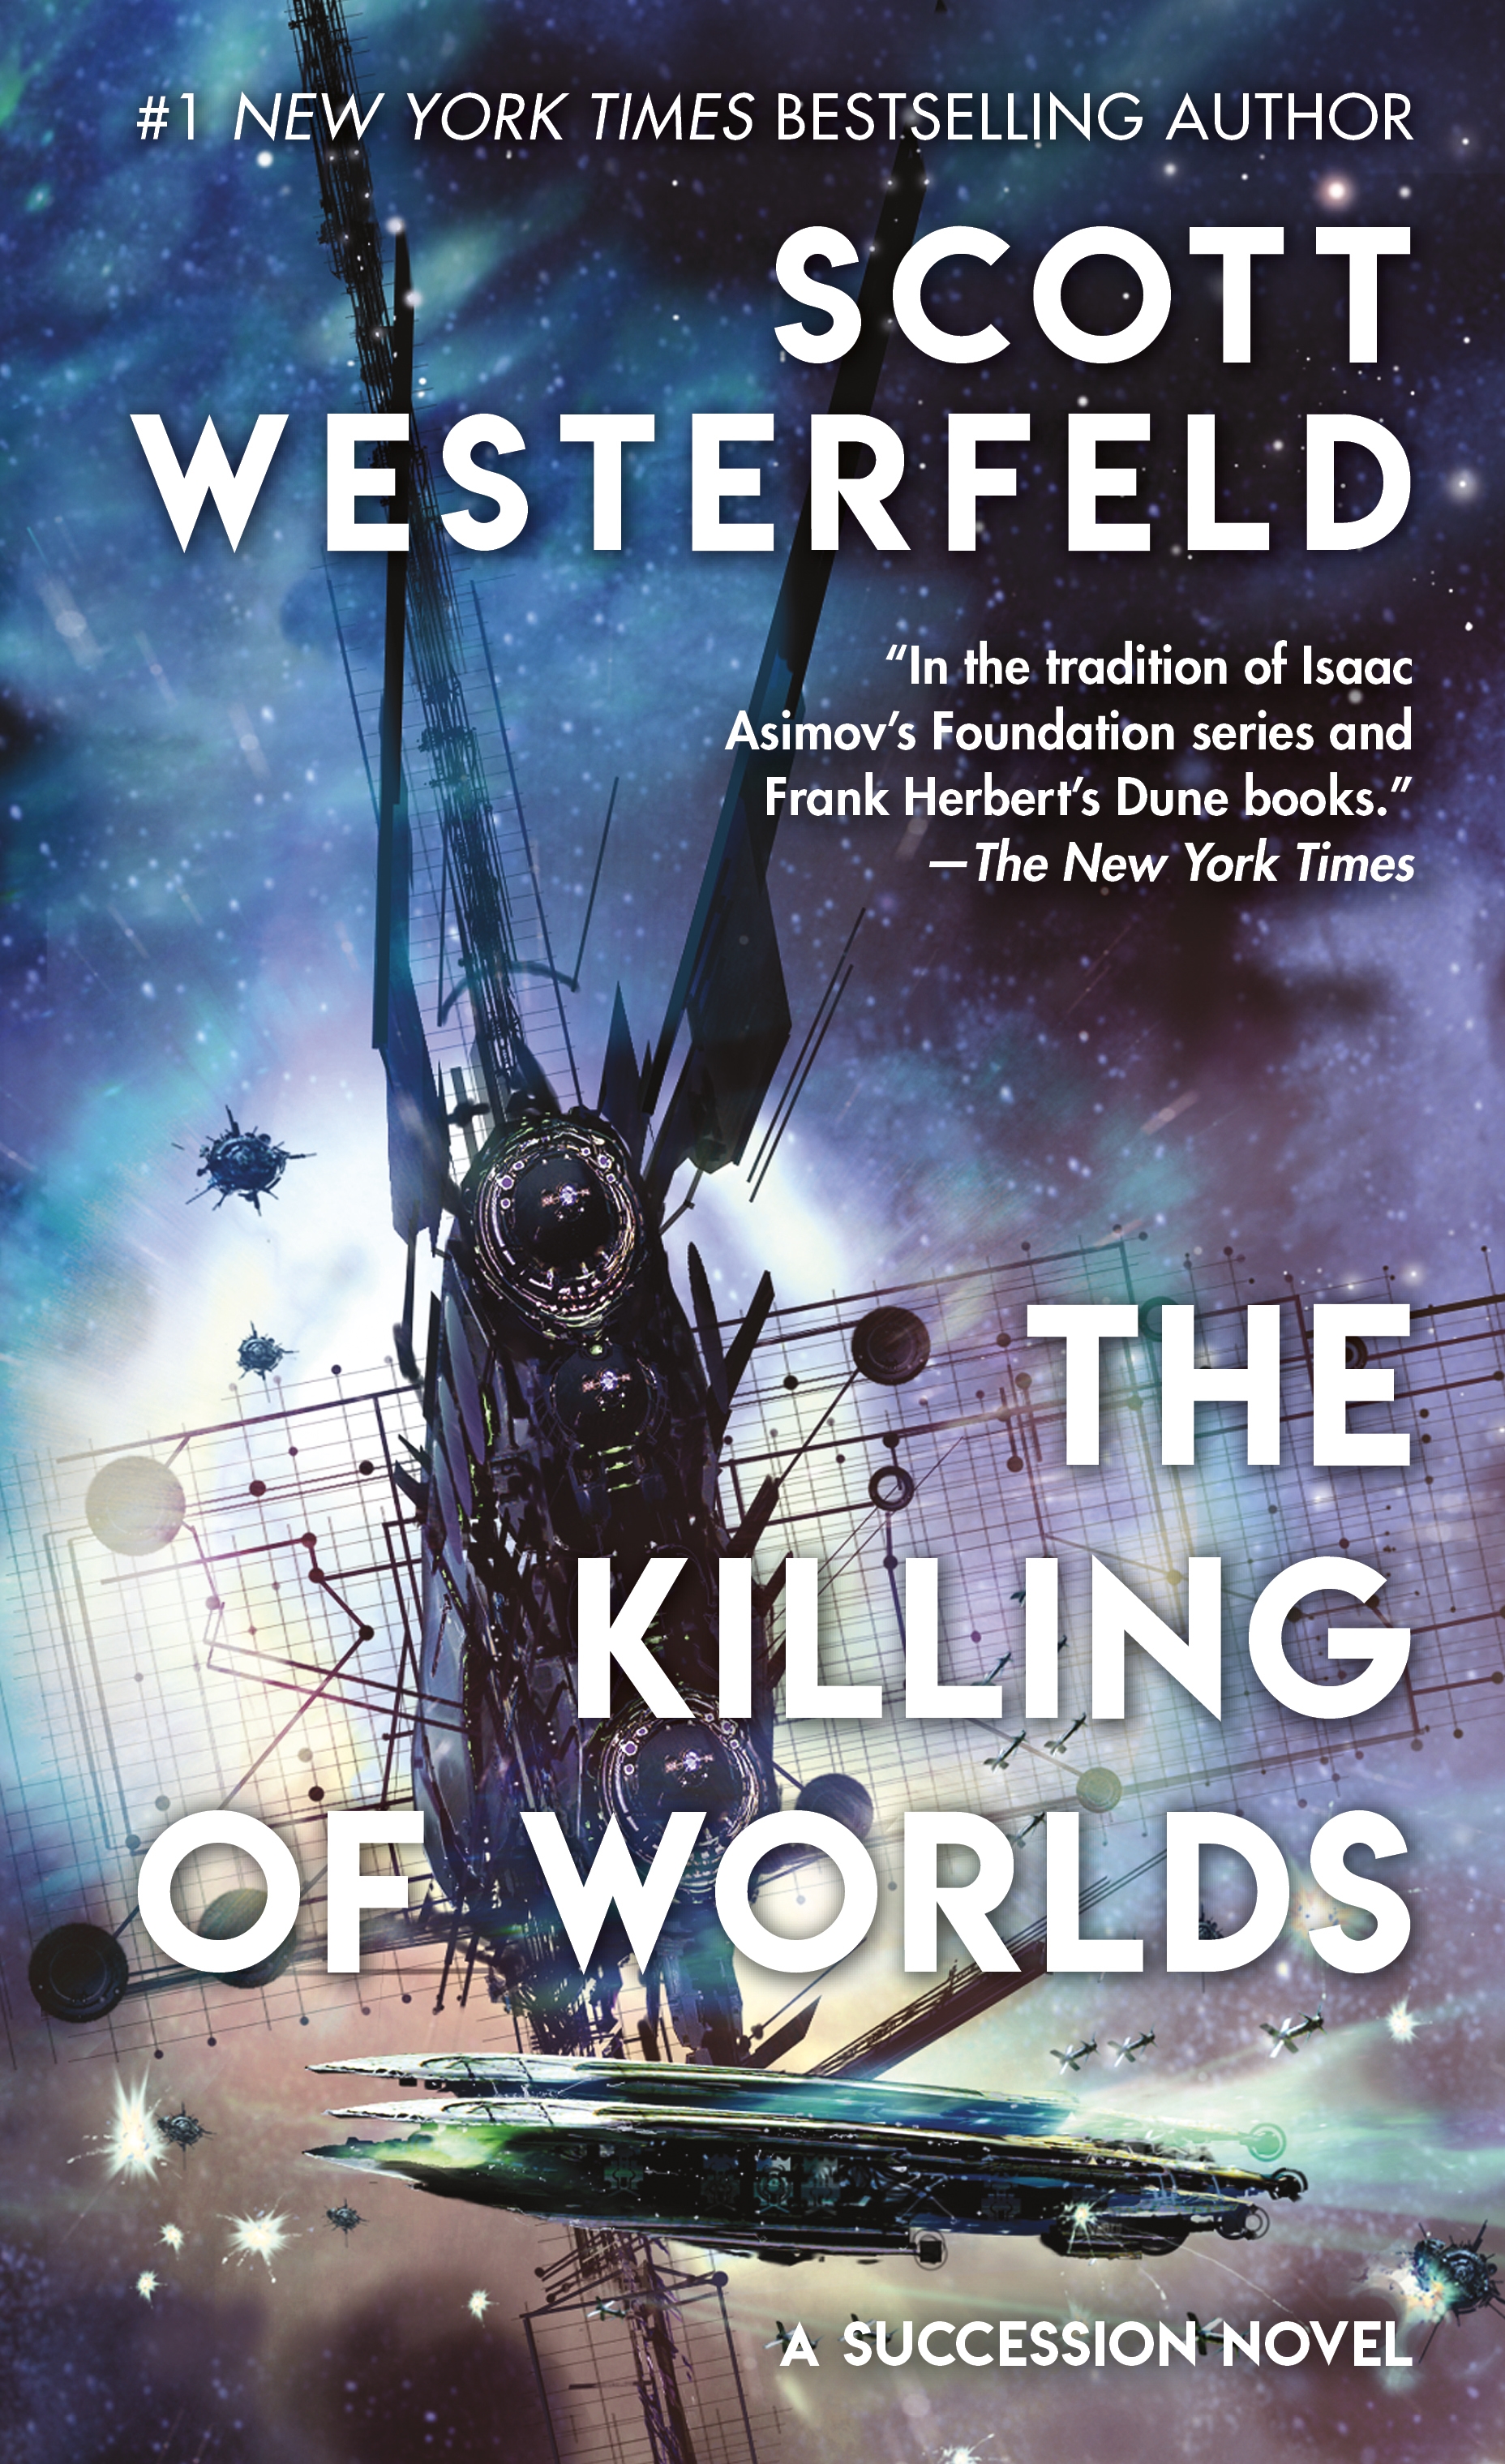 5 worlds book 3. Скотт Вестерфельд книги. Scott Westerfeld Leviathan.